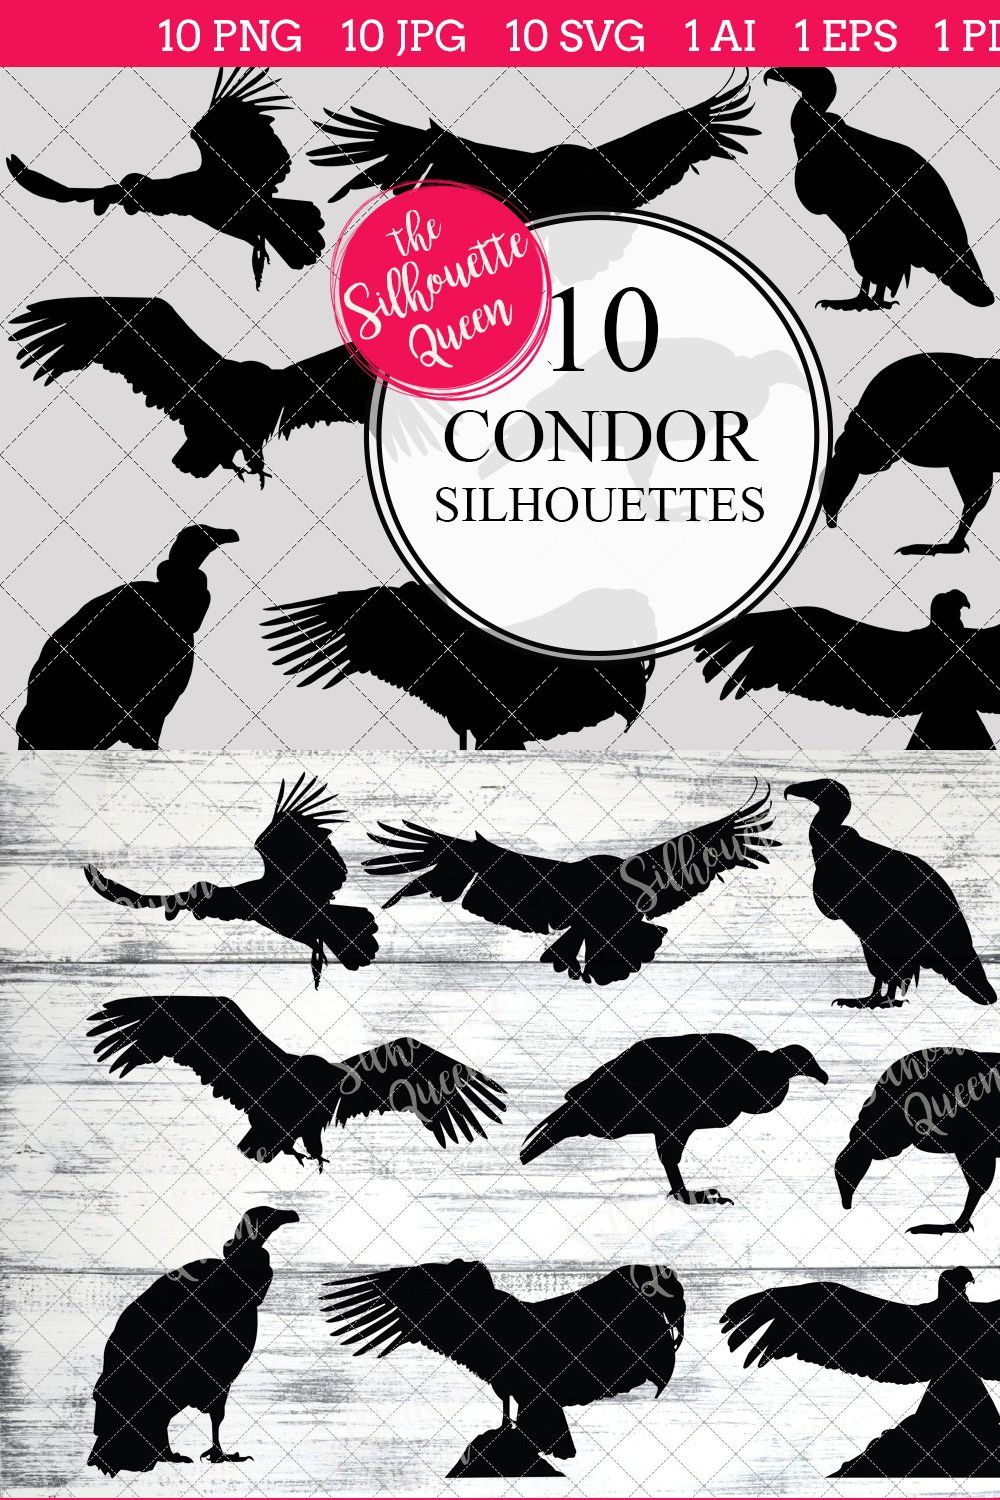 Condor Bird Silhouette Clipart pinterest preview image.